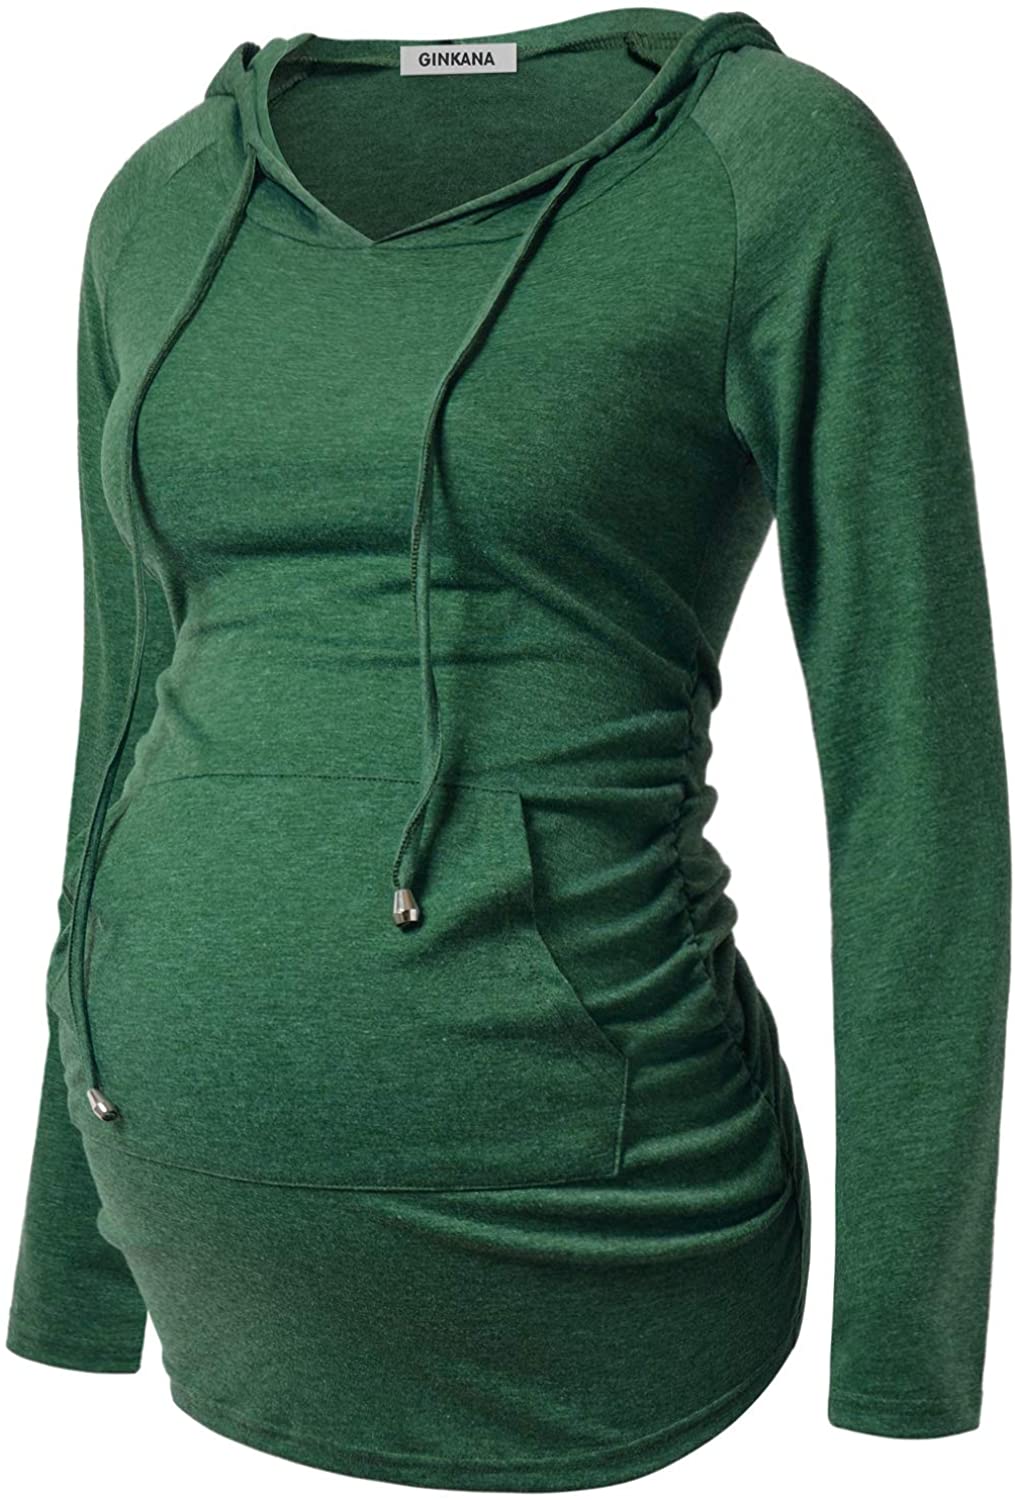 GINKANA Maternity Hoodie Long Sleeves Shirts Casual Maternity Top Pregnancy Sweatshirt Casual Clothes 